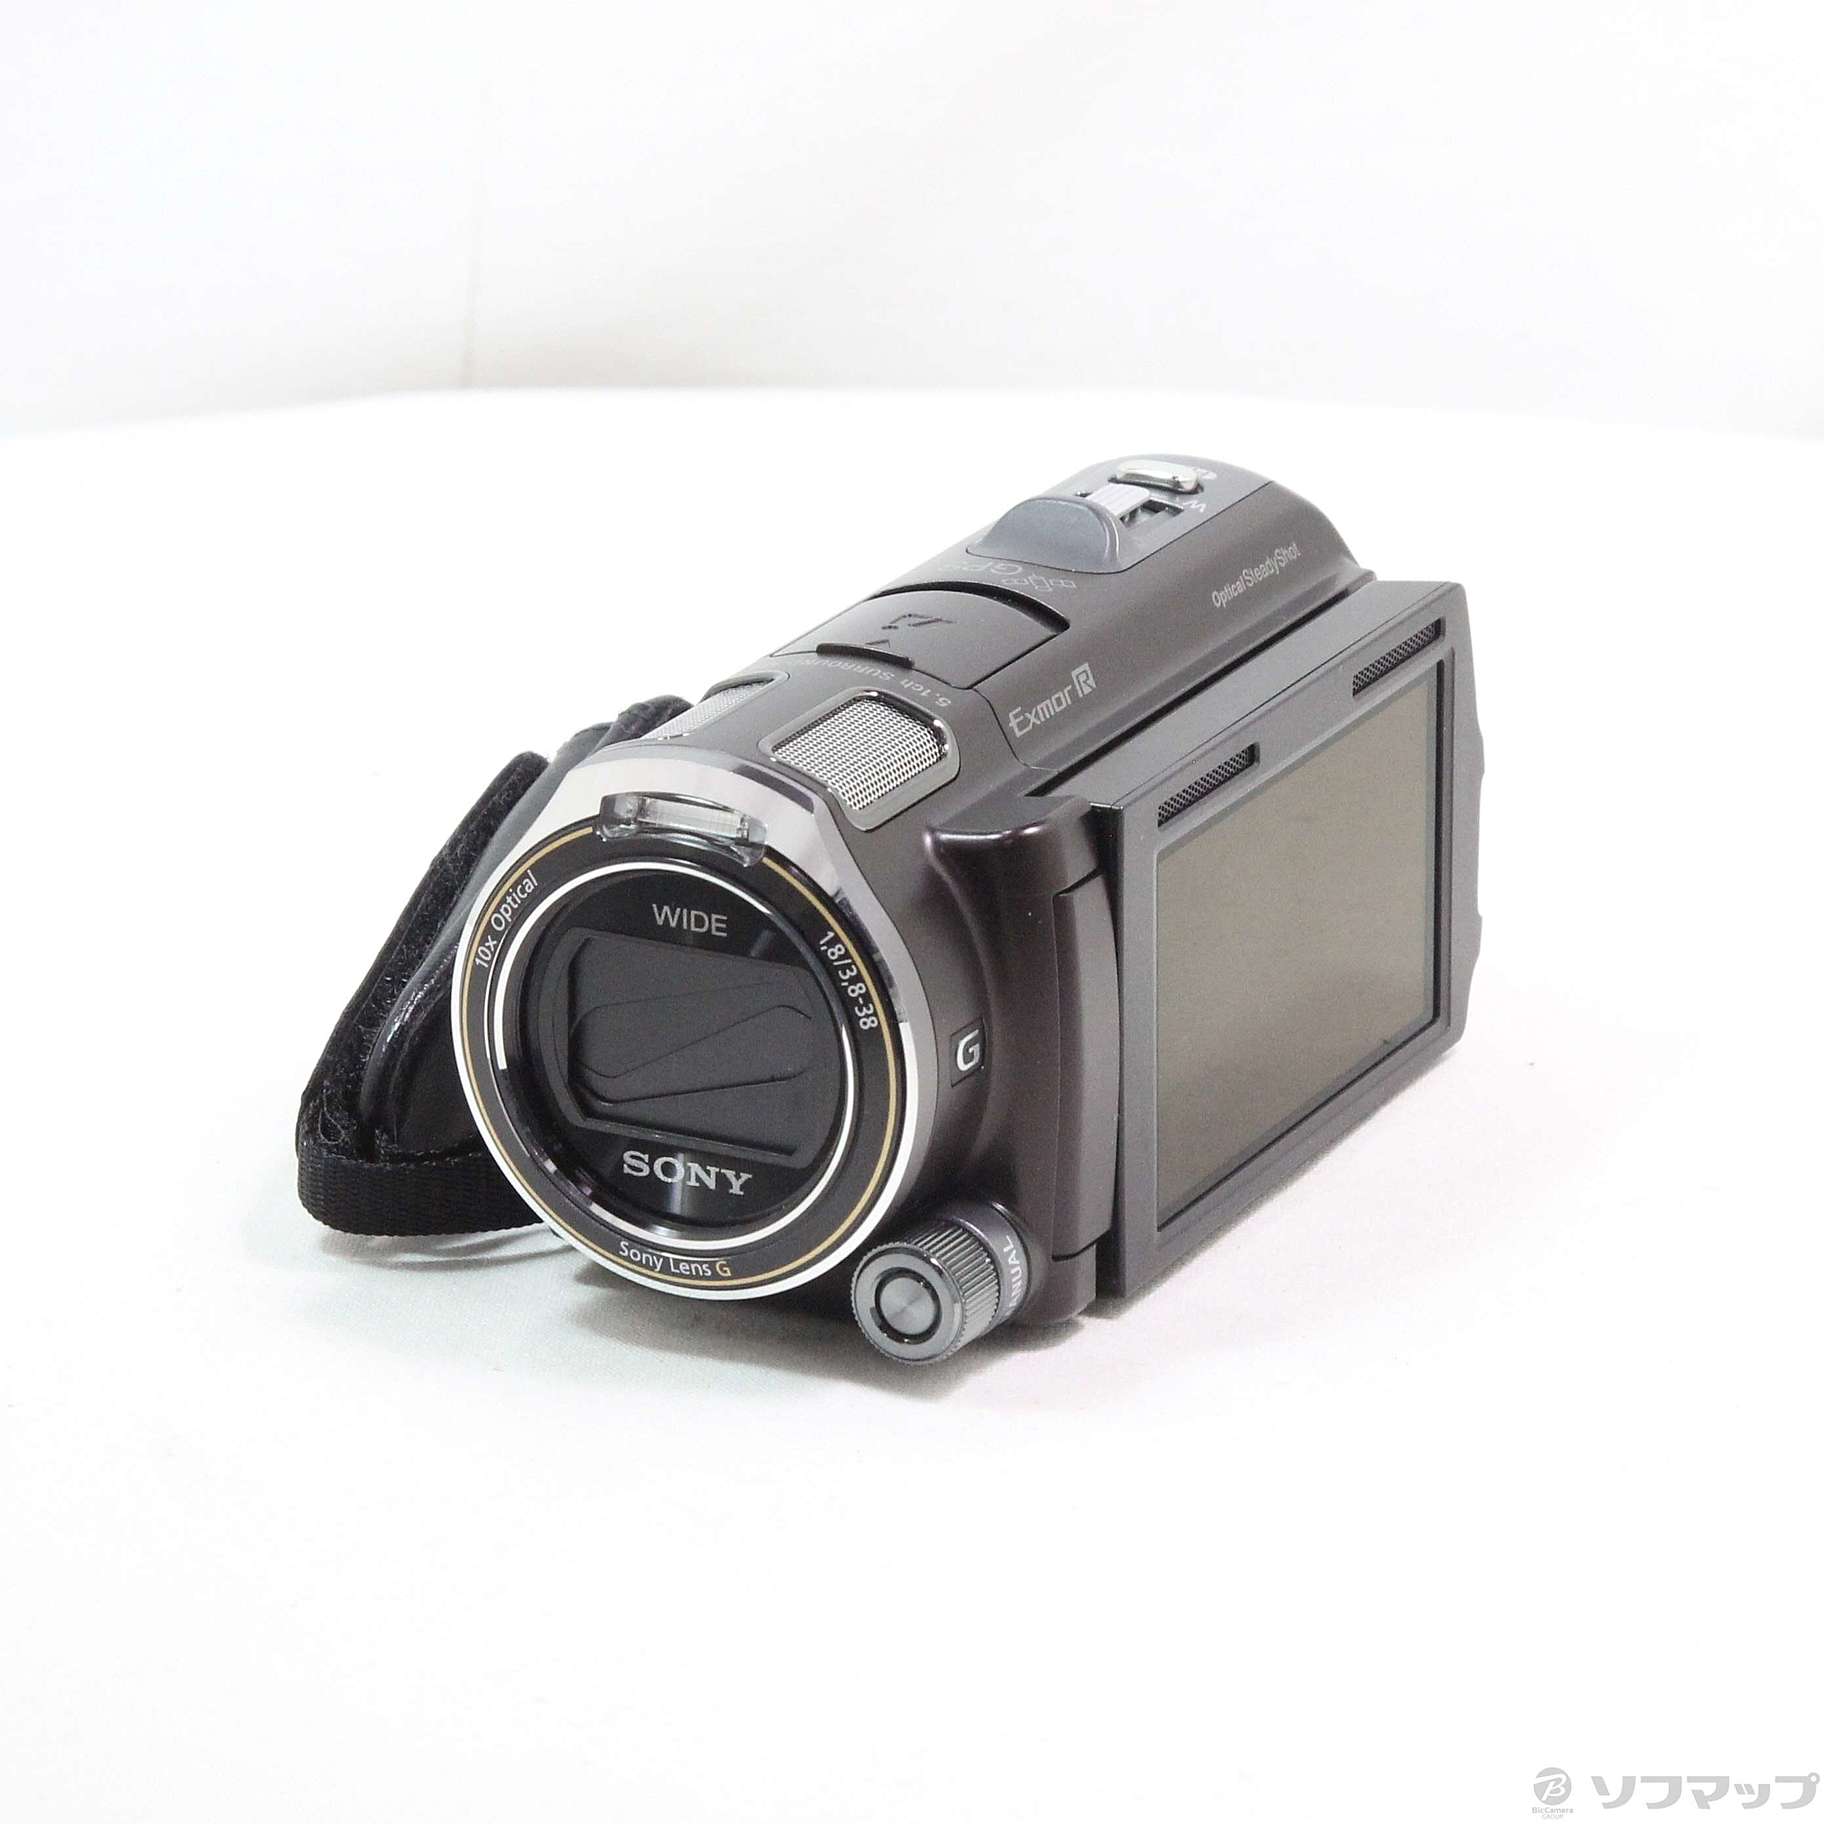 SONY HDR-CX560V(T) - ビデオカメラ